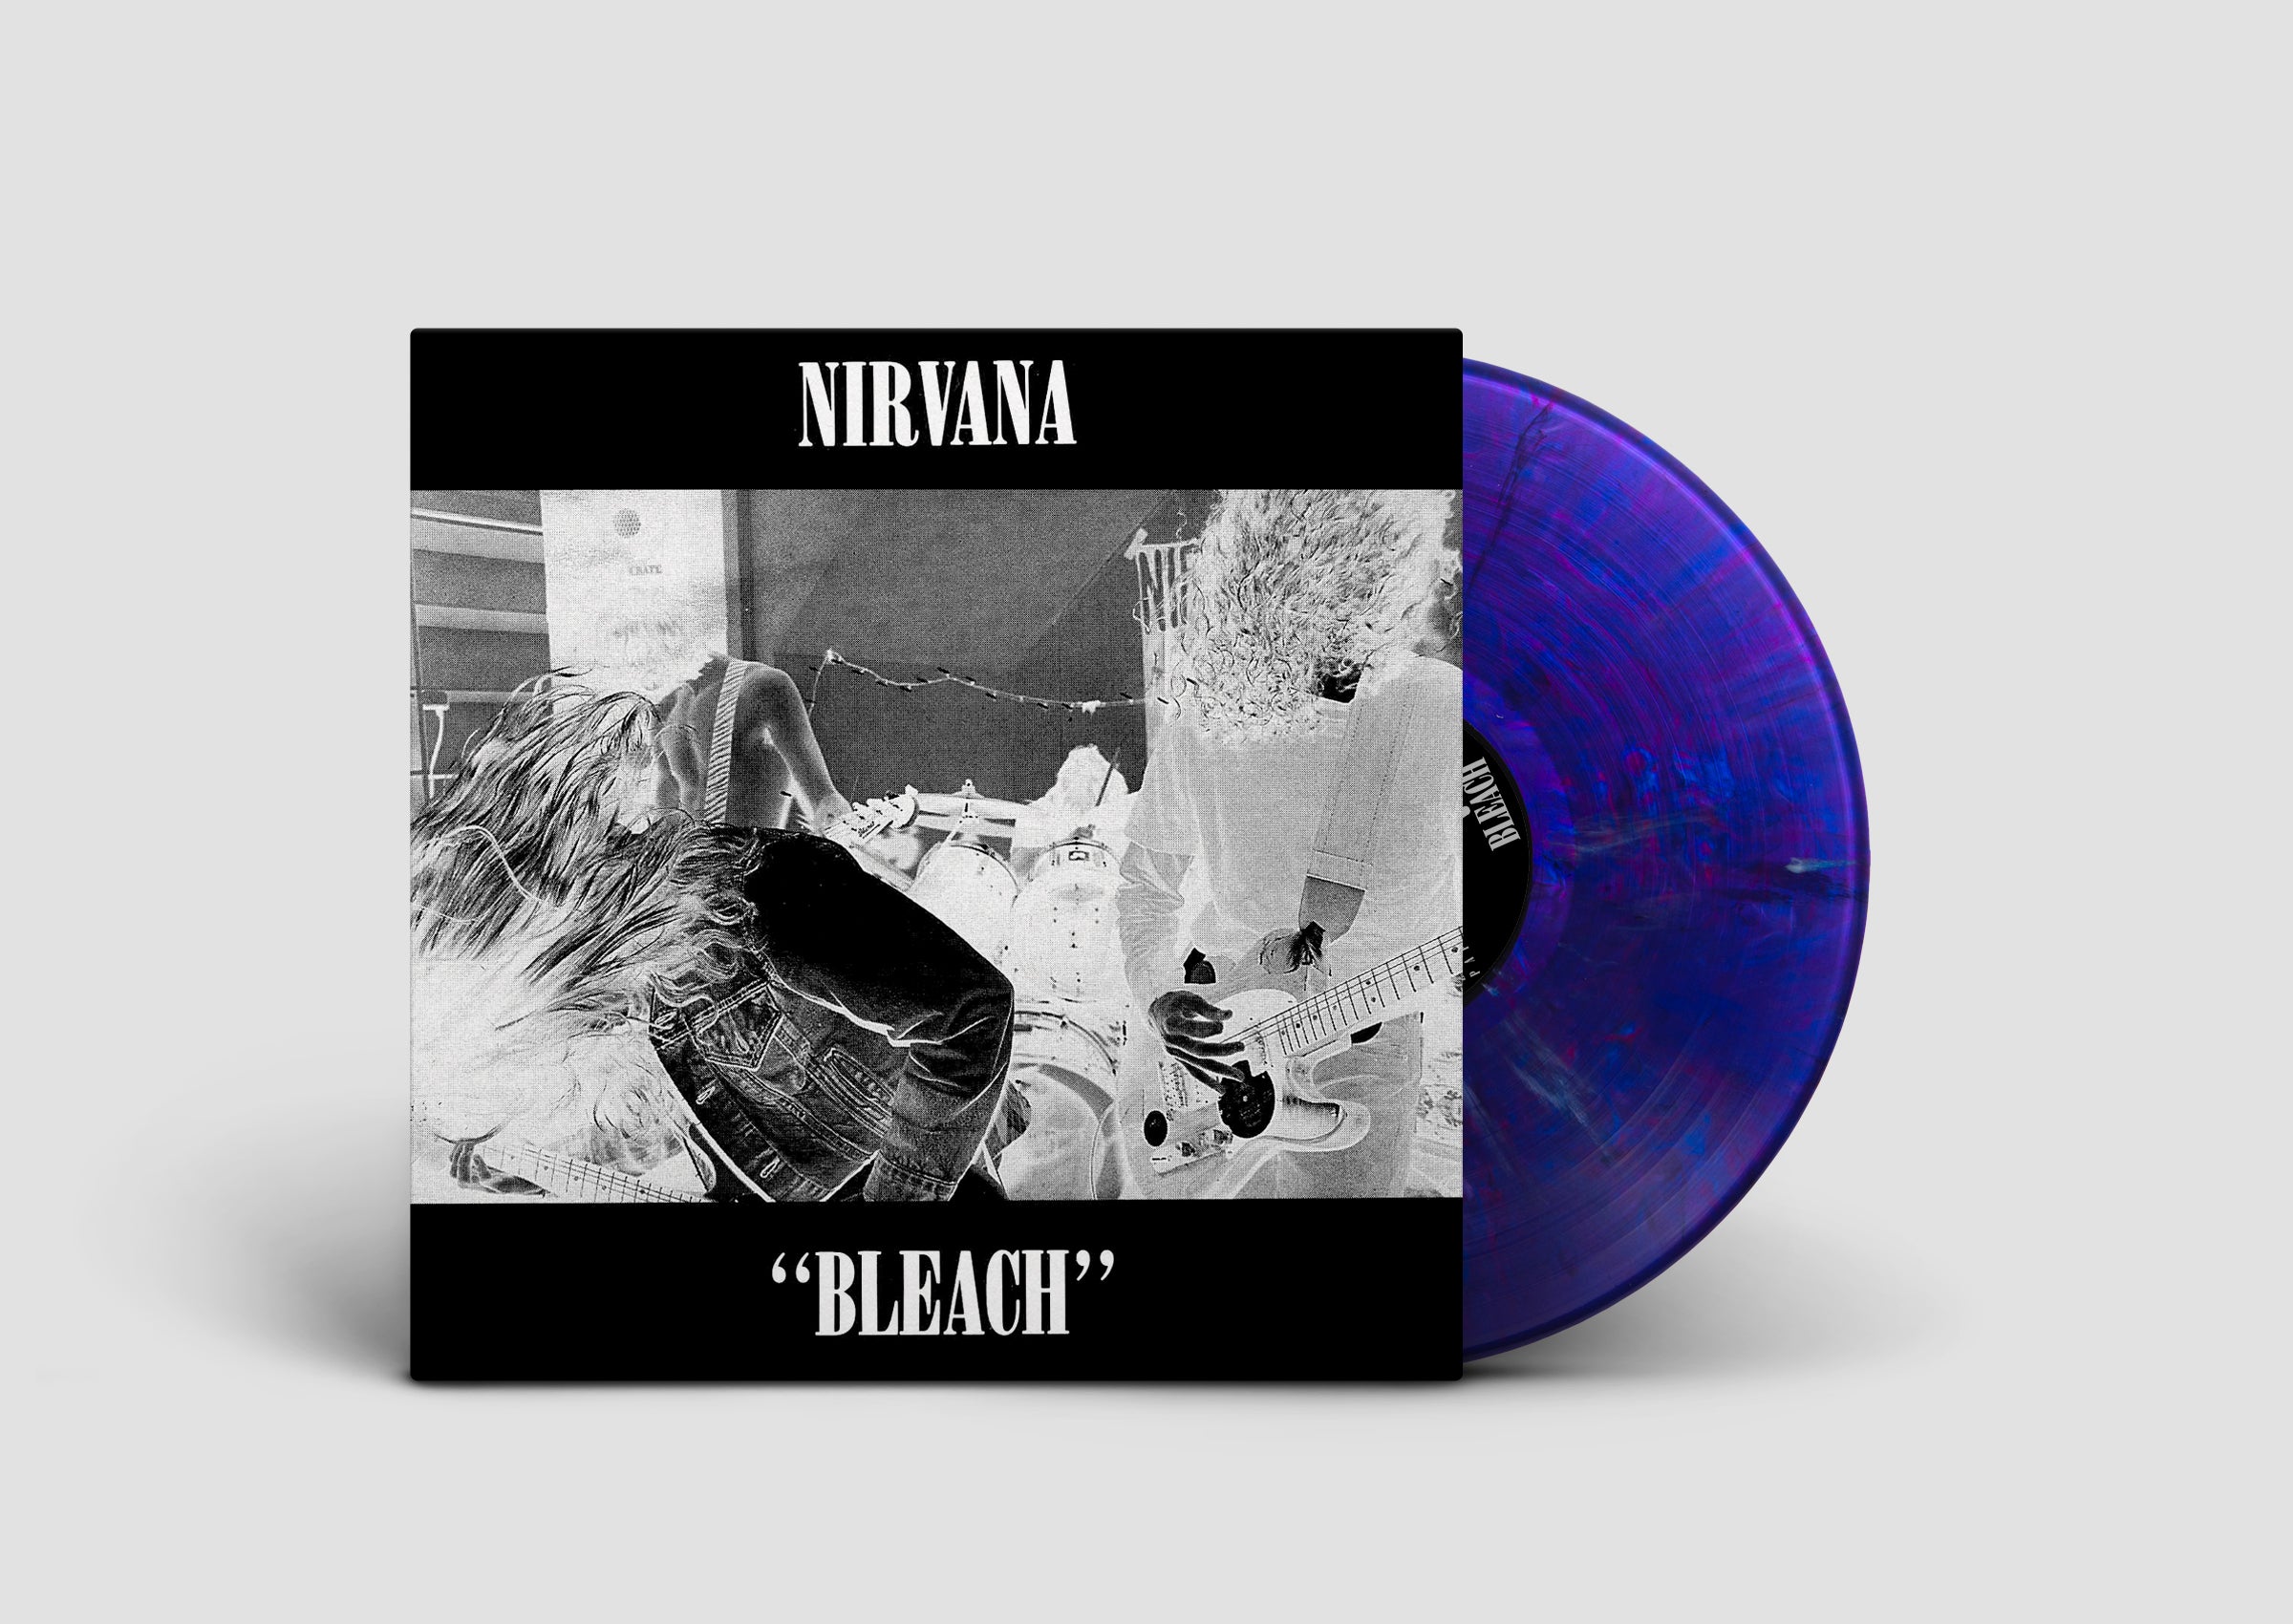 Nirvana - Bleach (Ltd. Ed. Blue/Black Vinyl) - Blind Tiger Record Club